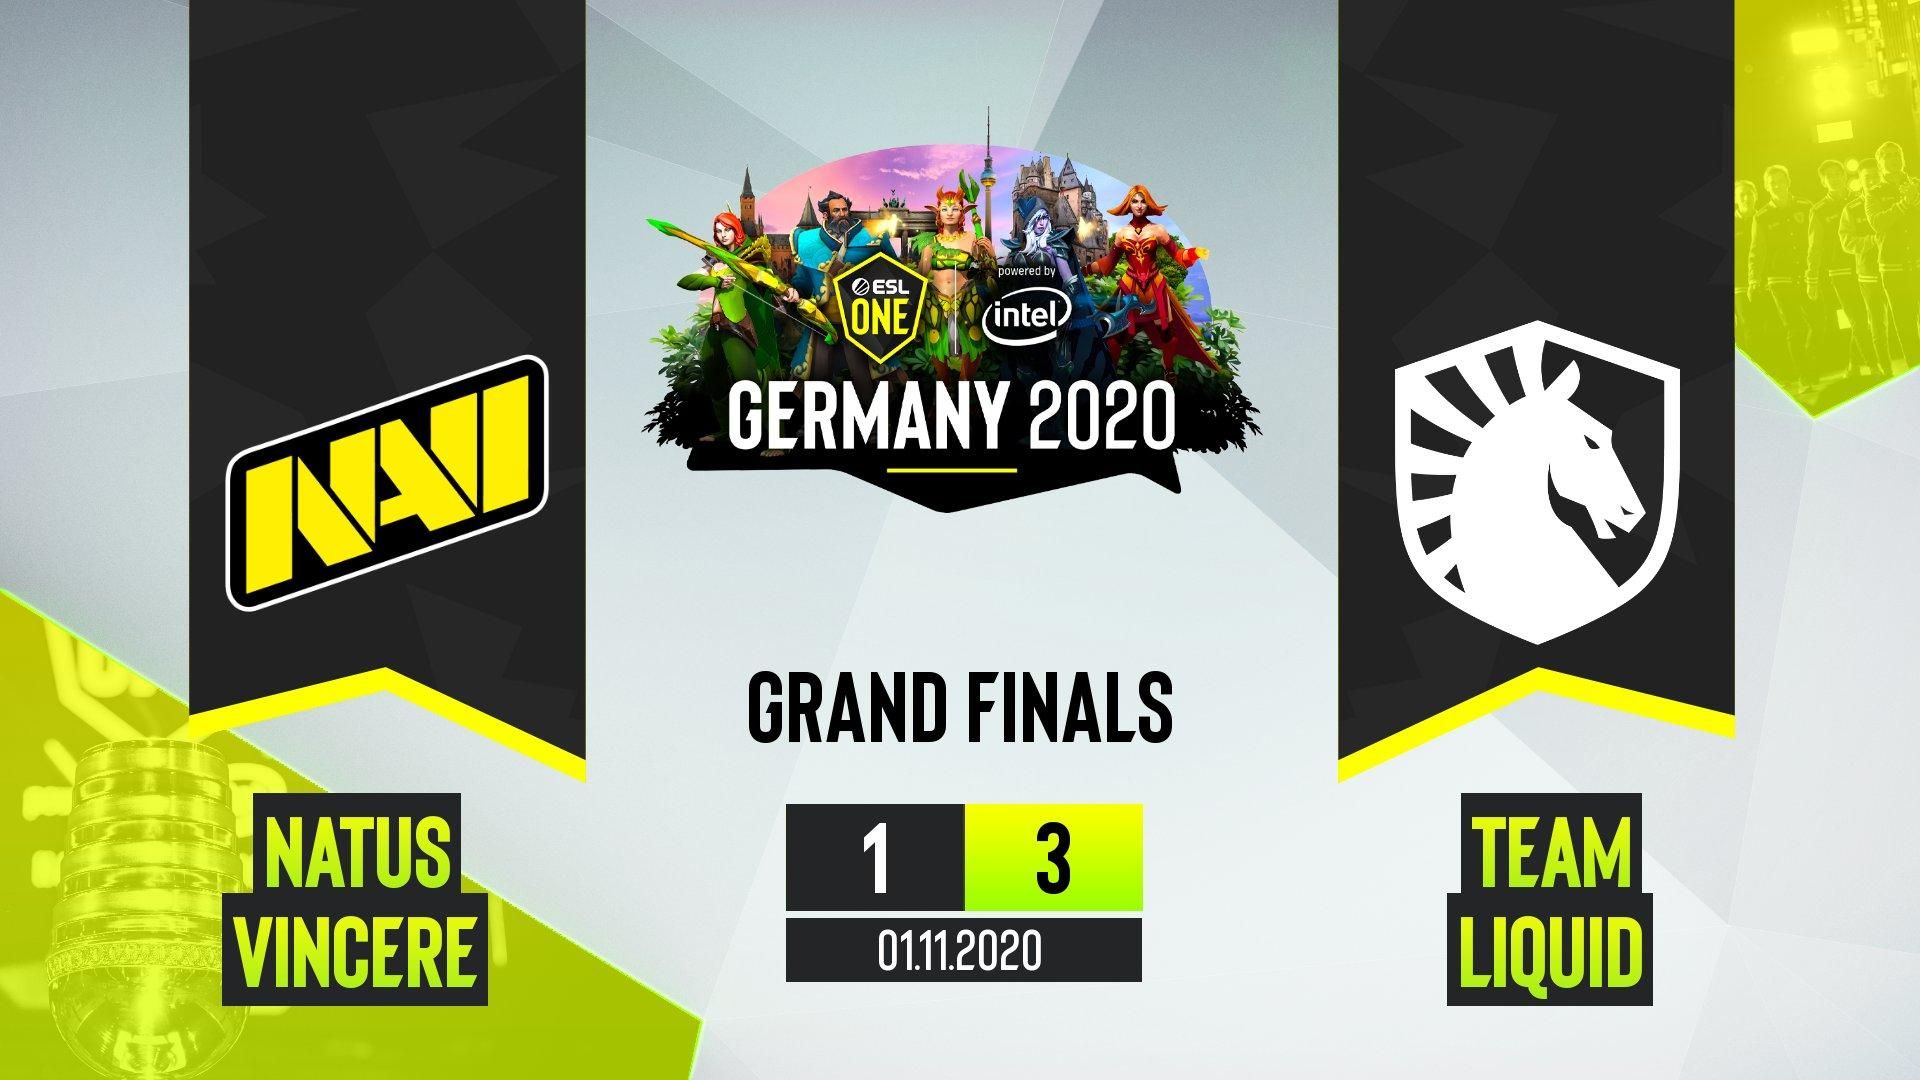 Українська команда програла у гранд-фіналі ESL One Germany 2020 команді Team Liquid з рахунком 1:3